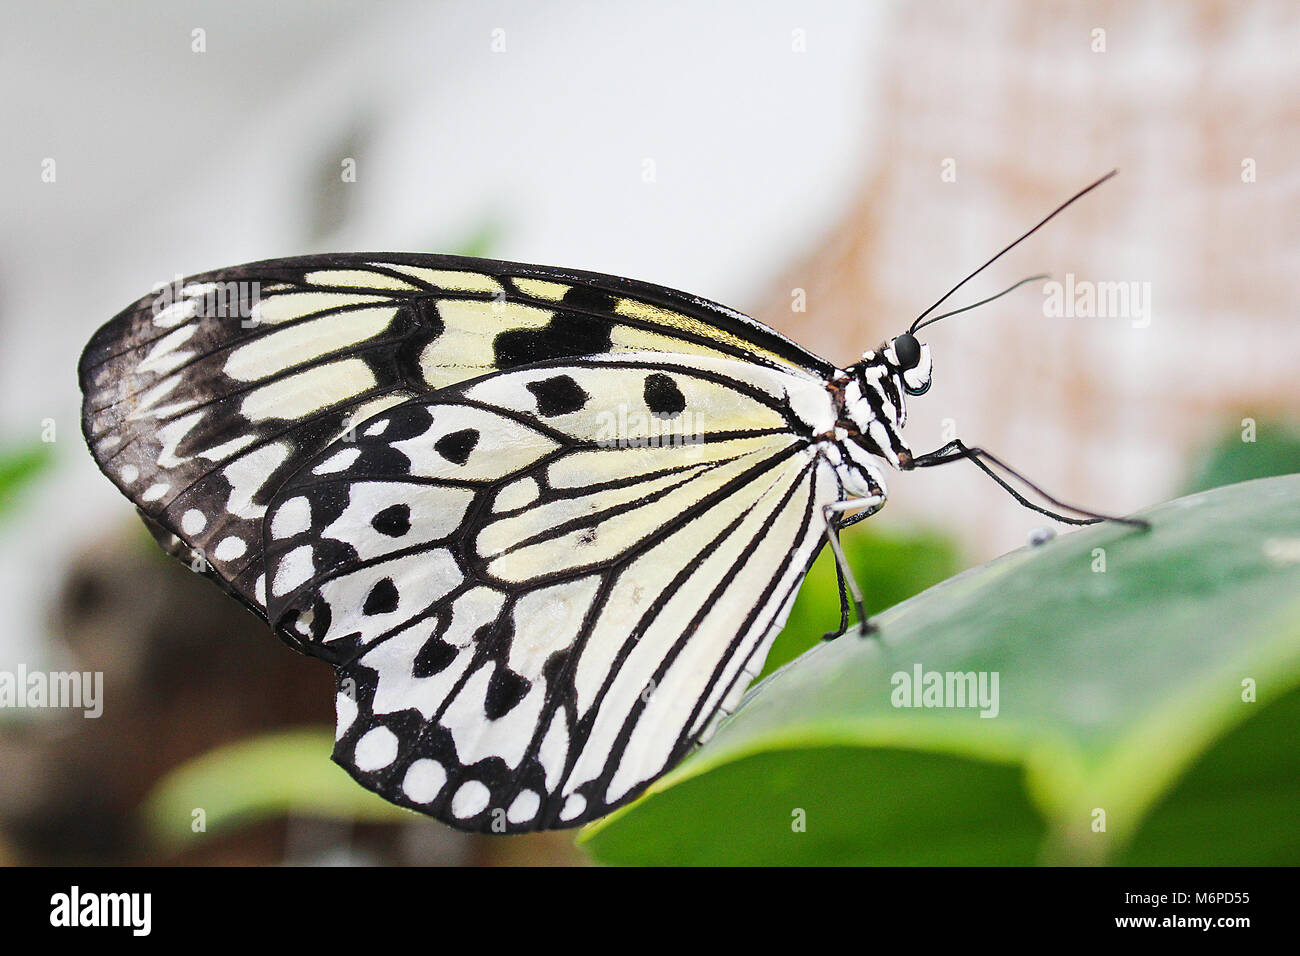 Big White butterfly article sur feuille verte Banque D'Images